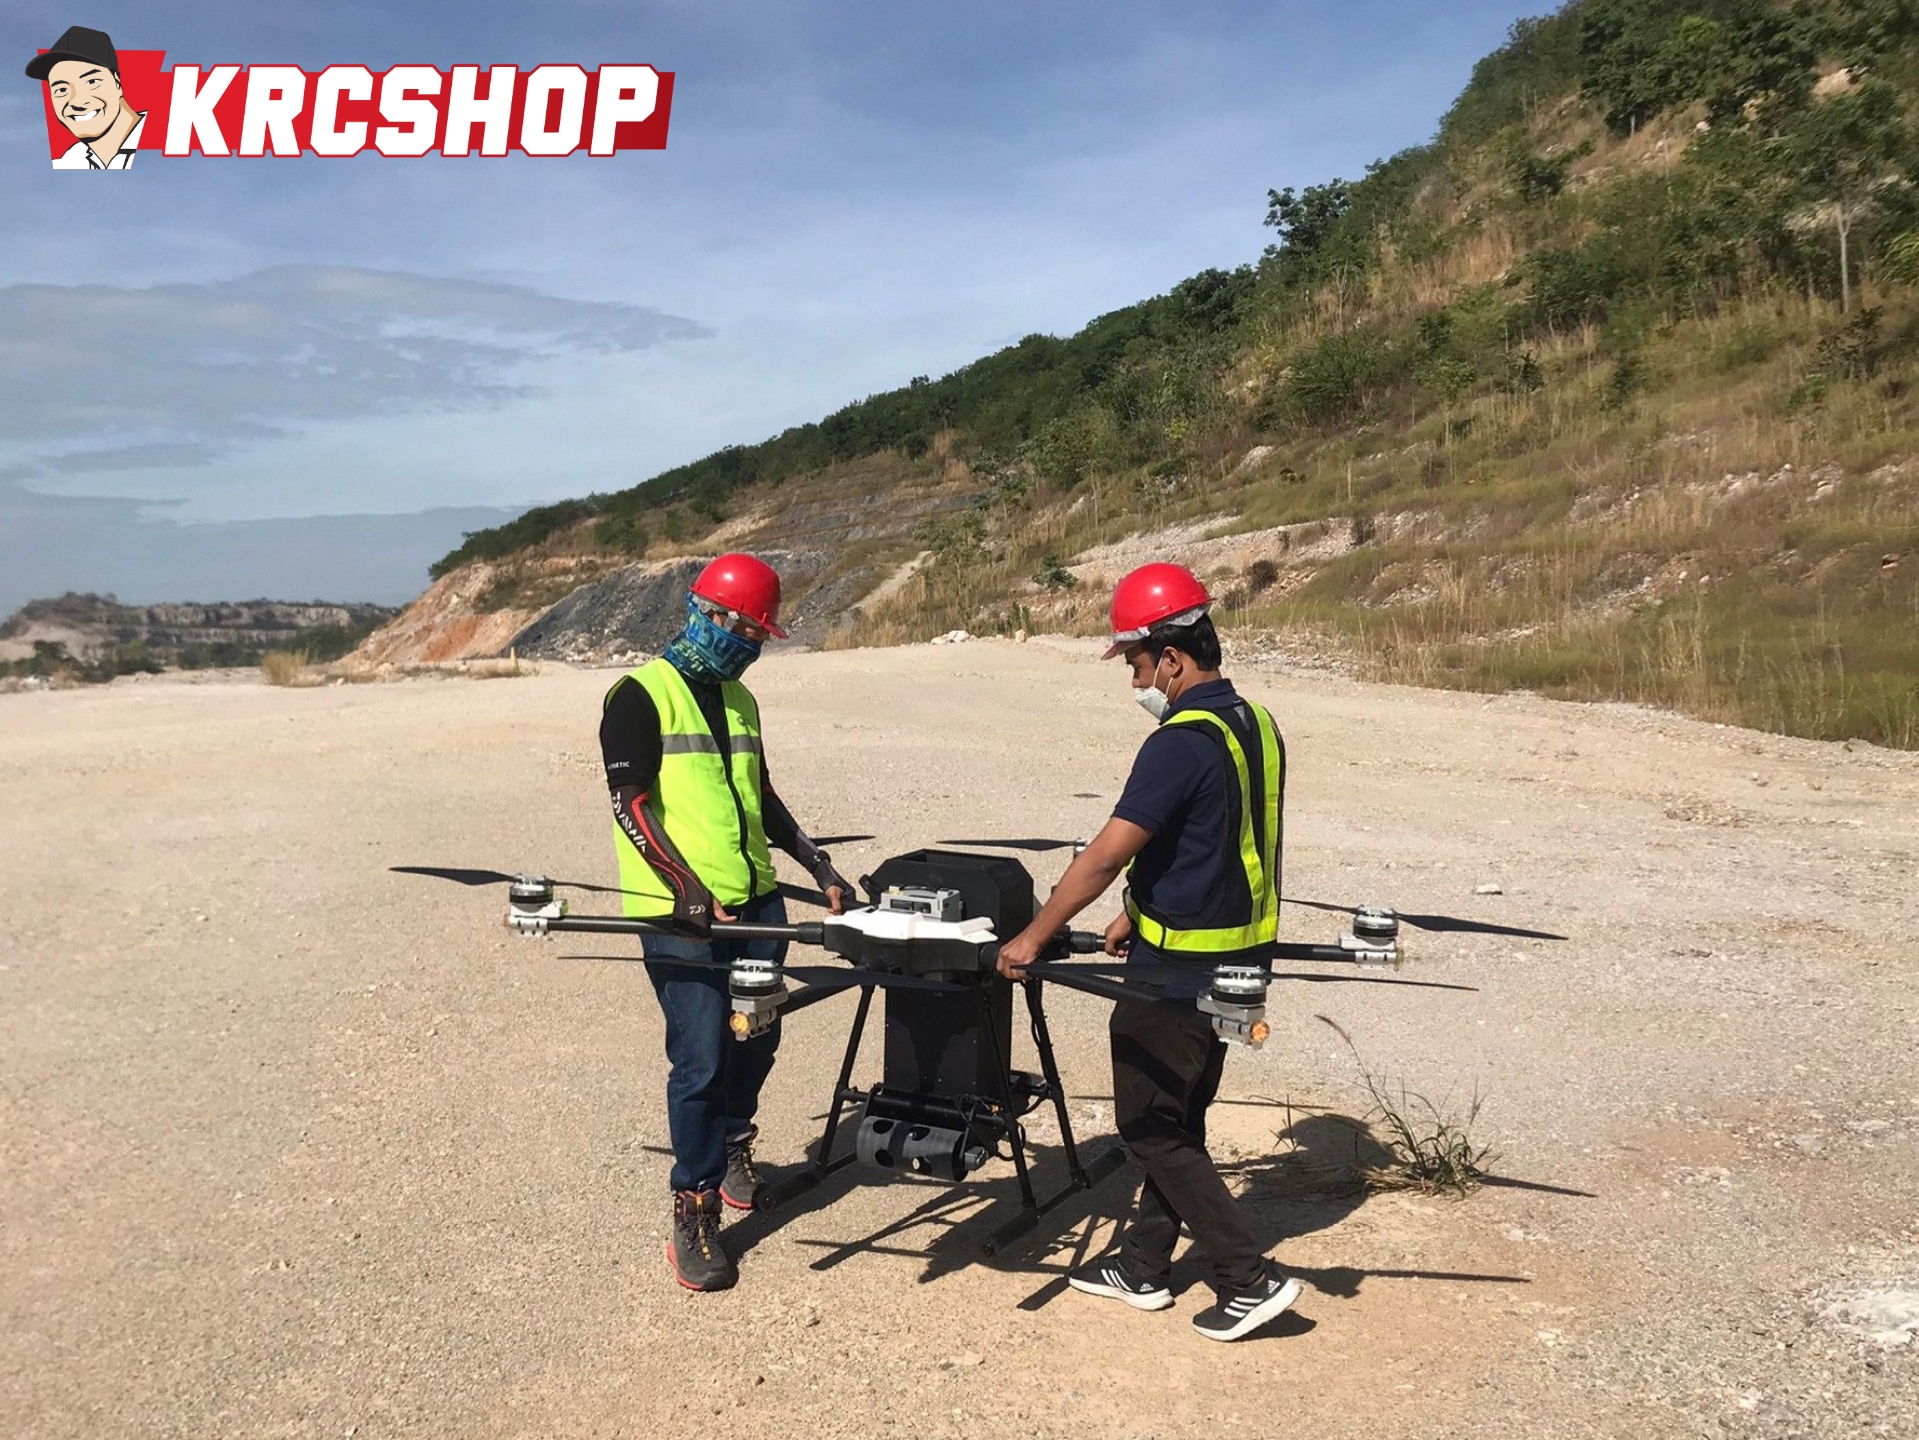 SCG AEROSEEDER โดรนปลูกป่า โดย CPAC Drone Solution